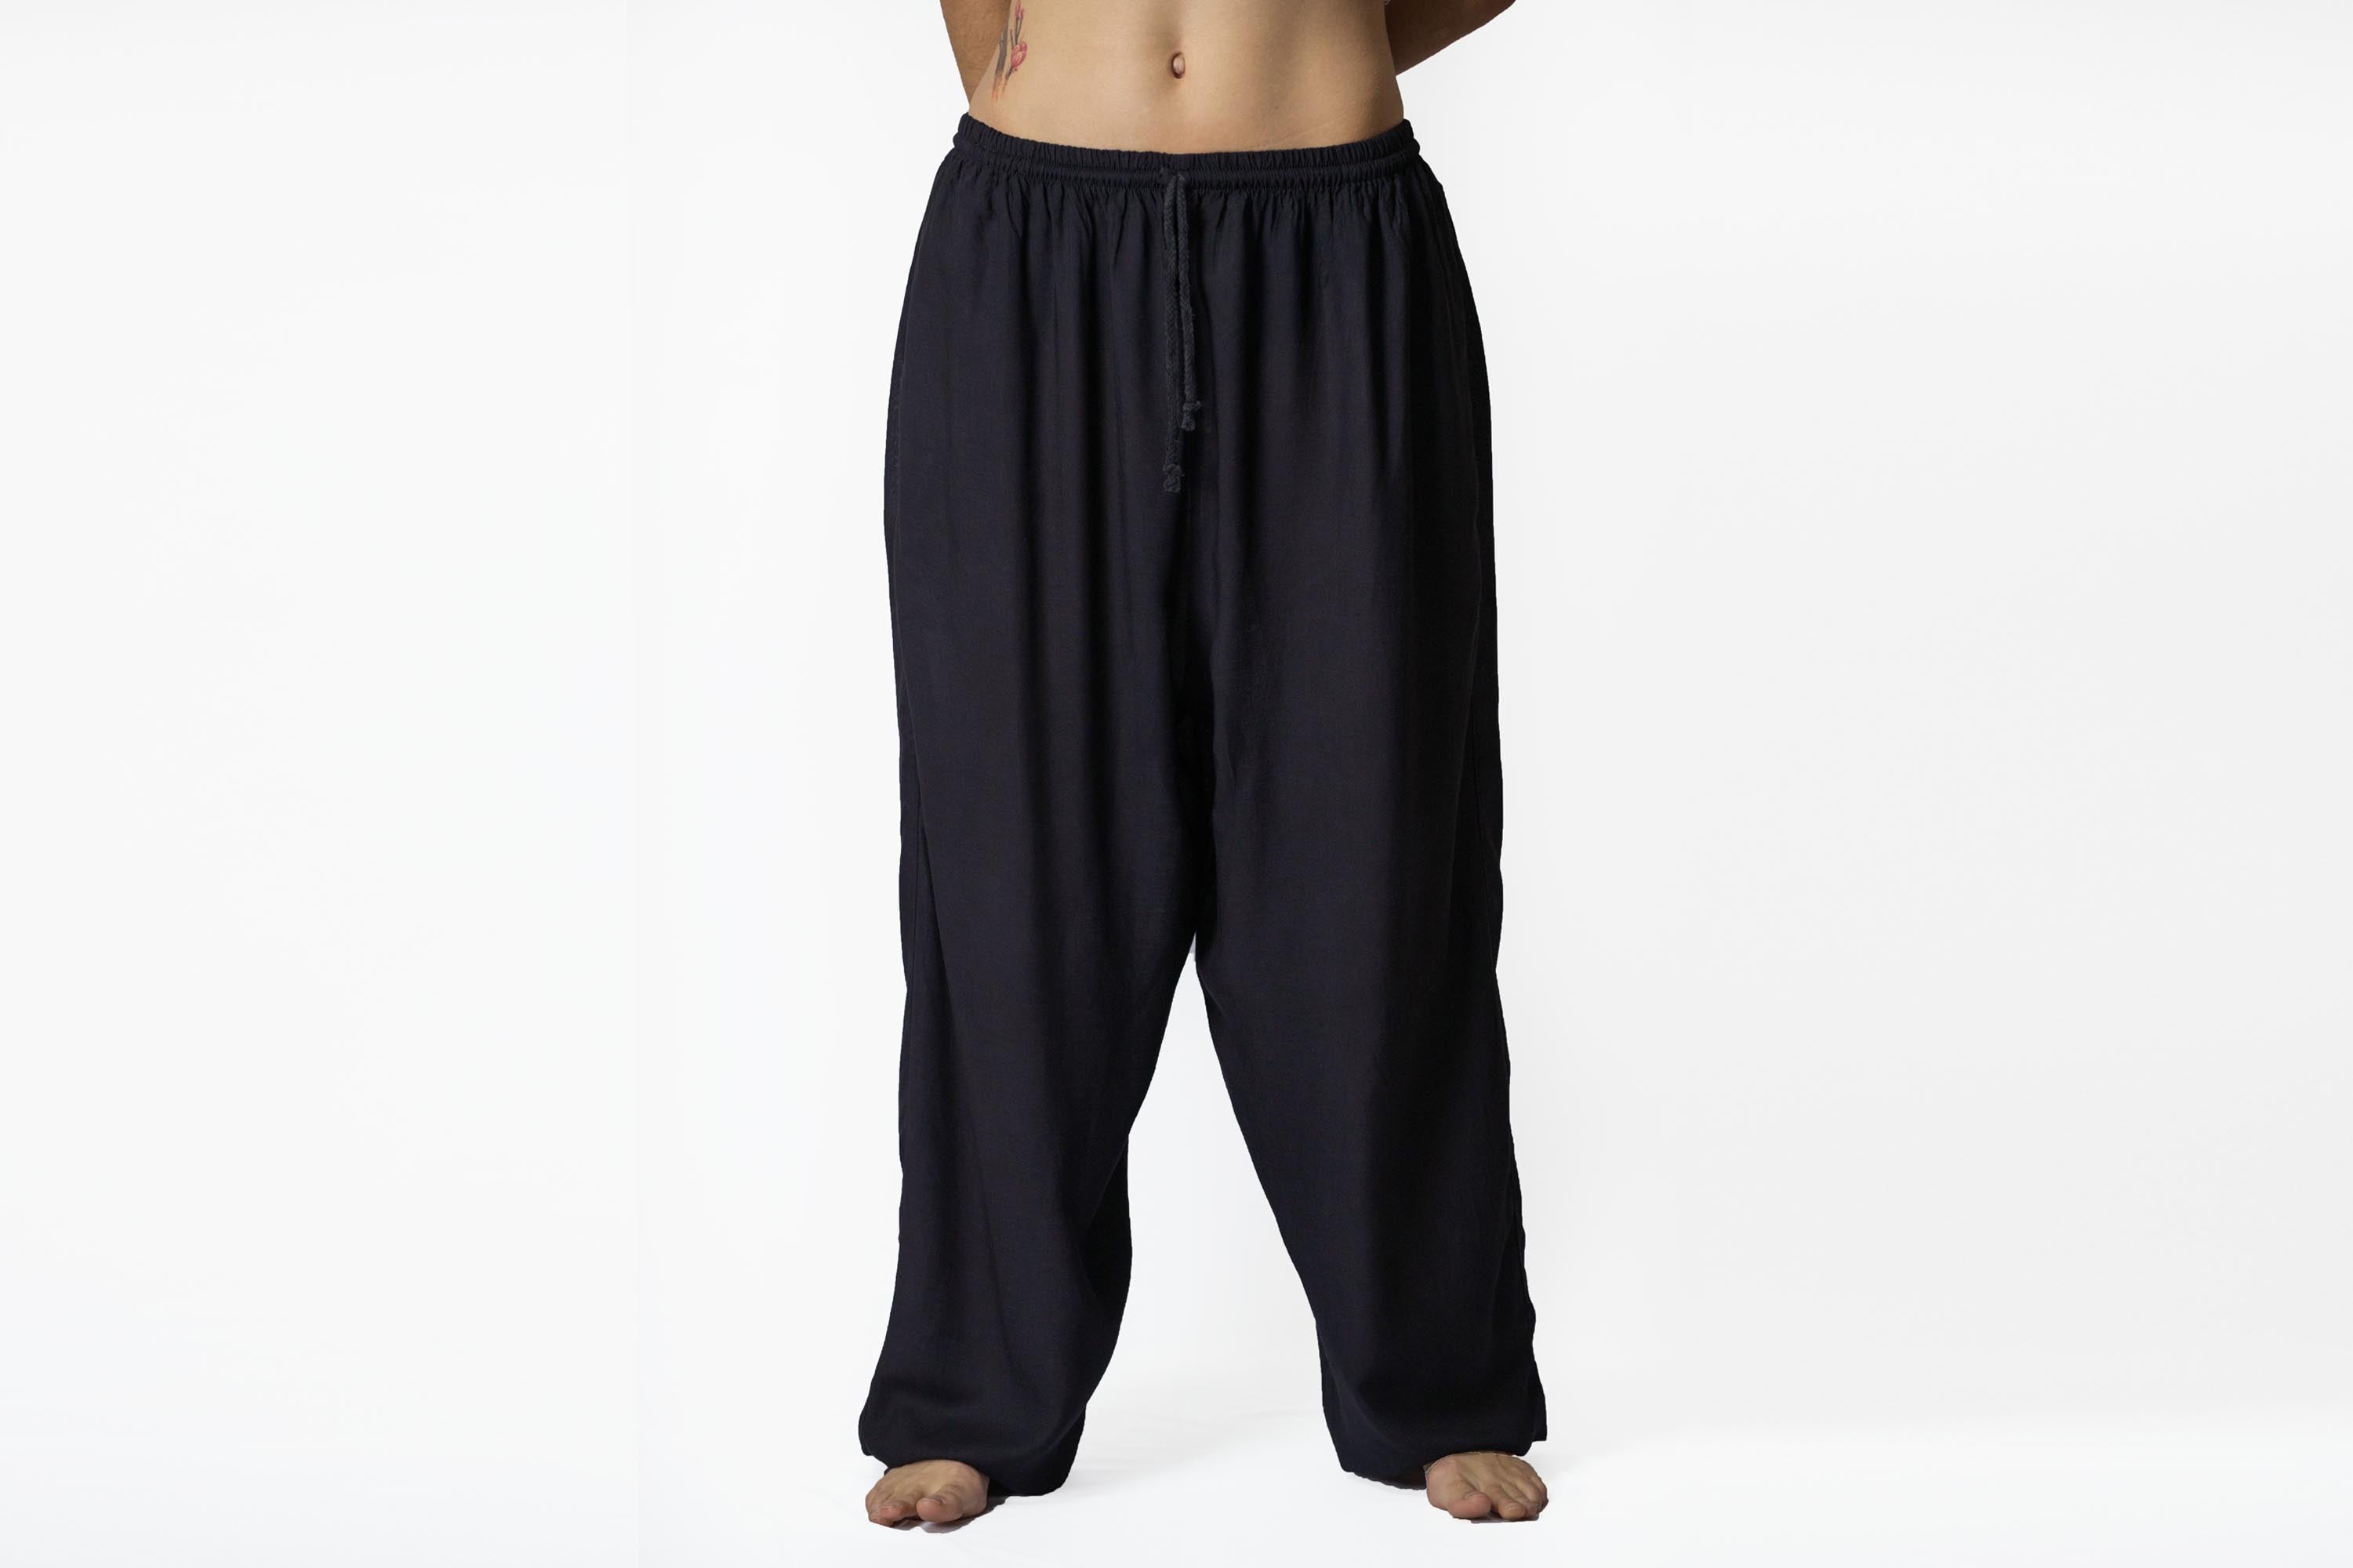 Zengjo Women's Yoga Pants (Black/Hot Pink,S) at  Women's